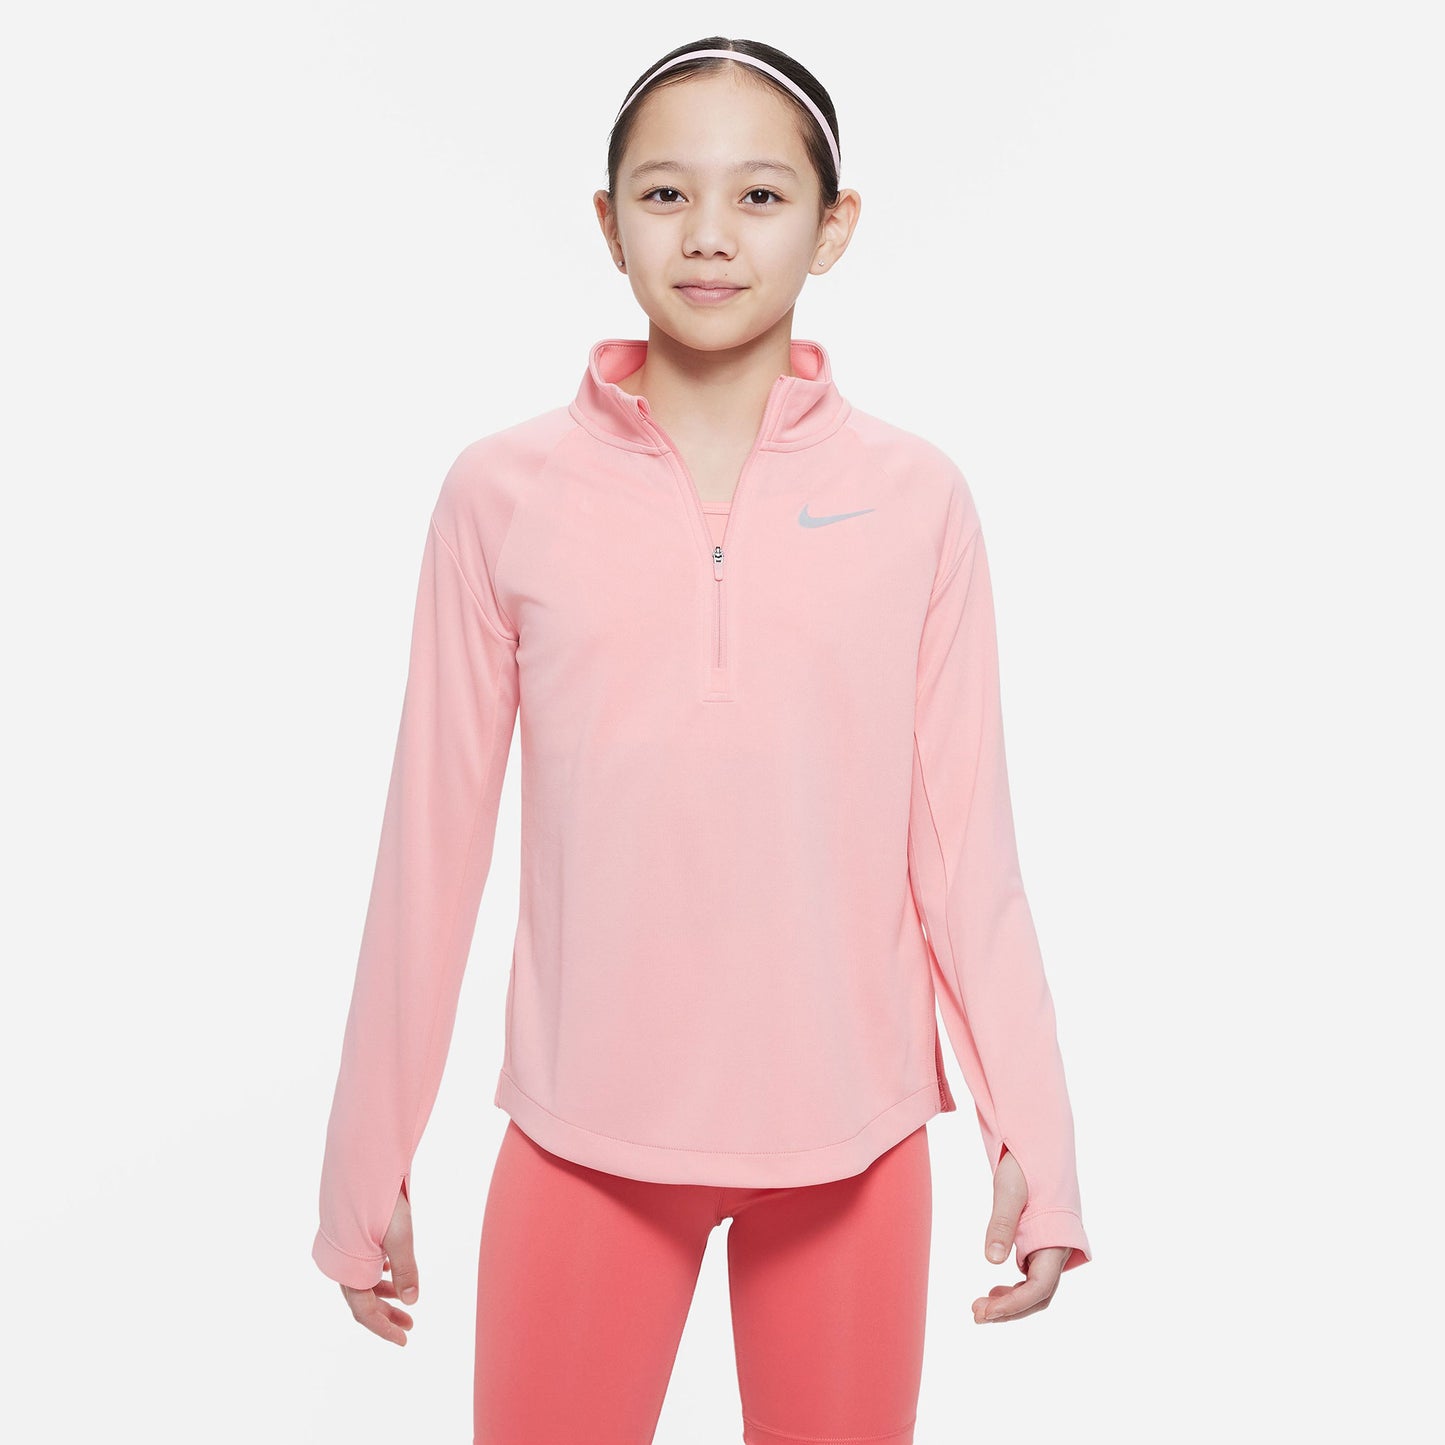 Nike Dri-FIT Girls' Long-Sleeve Top Pink (1)